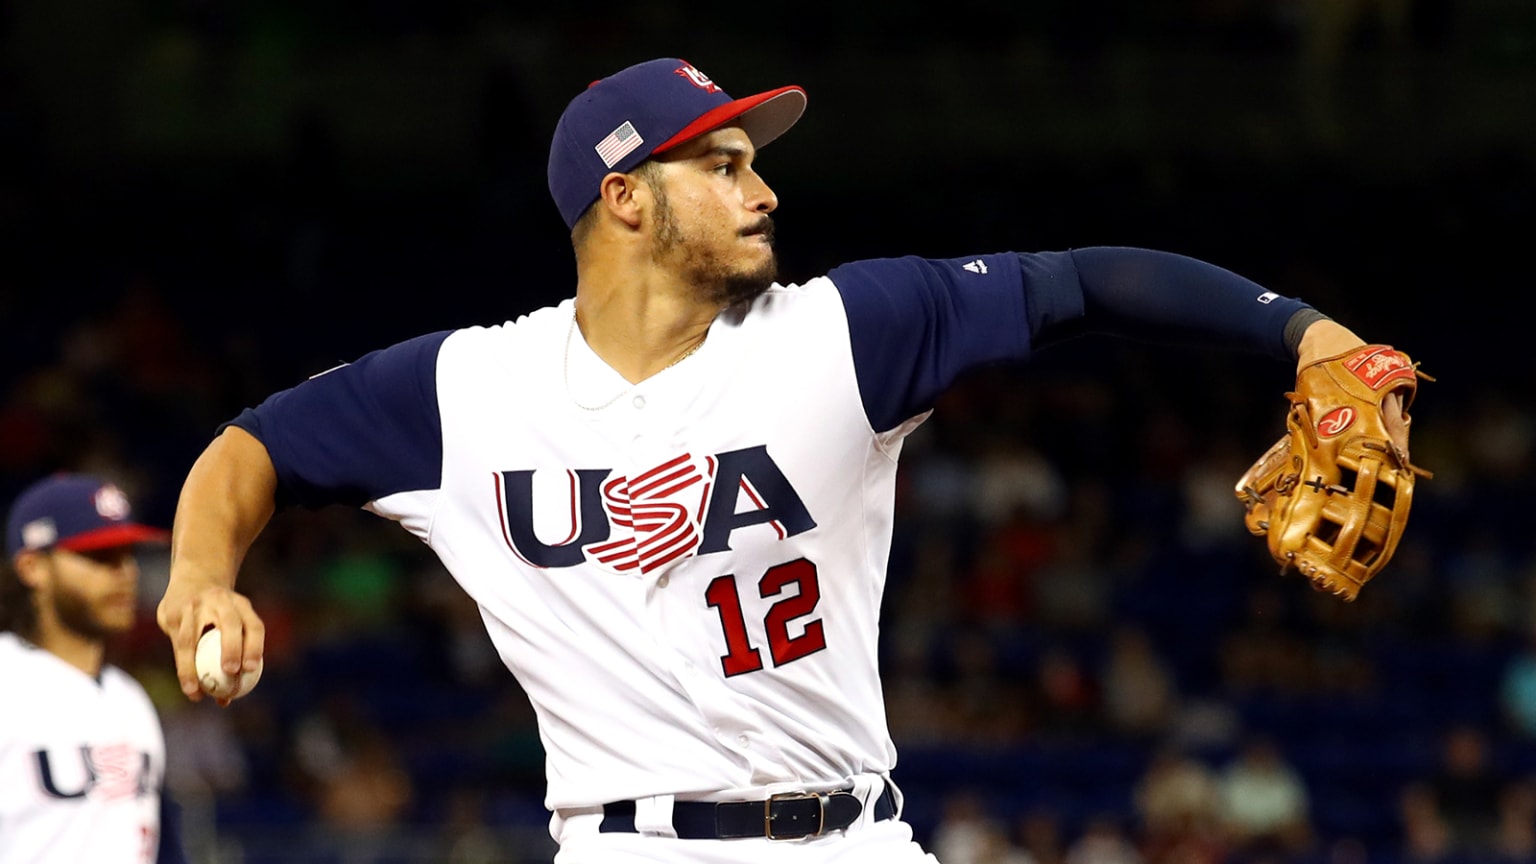 U.S. Olympic Team Roster Announced USA Baseball